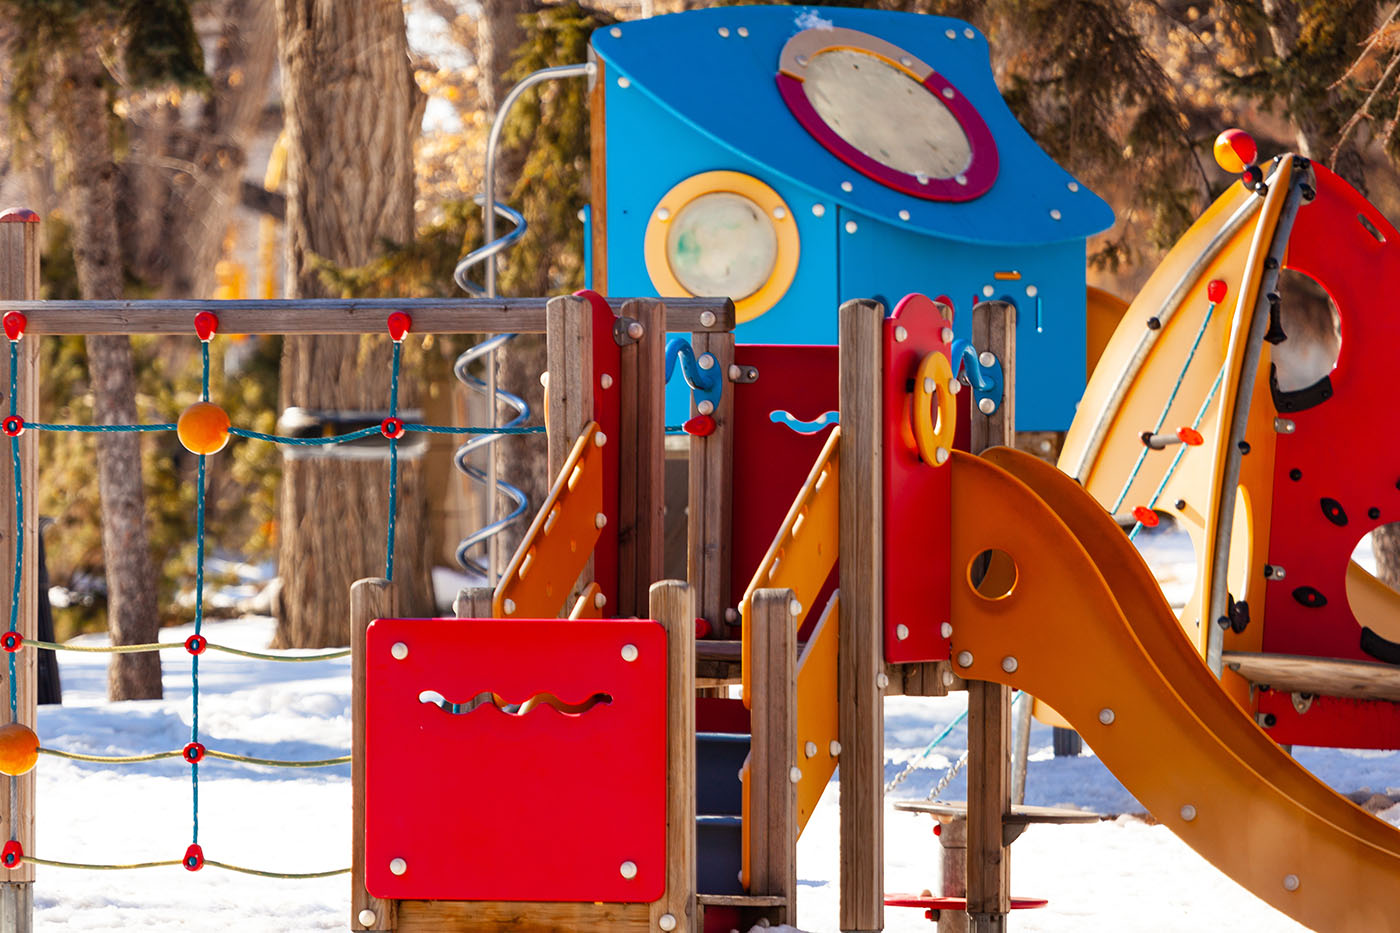 Playground representing childhood emotions